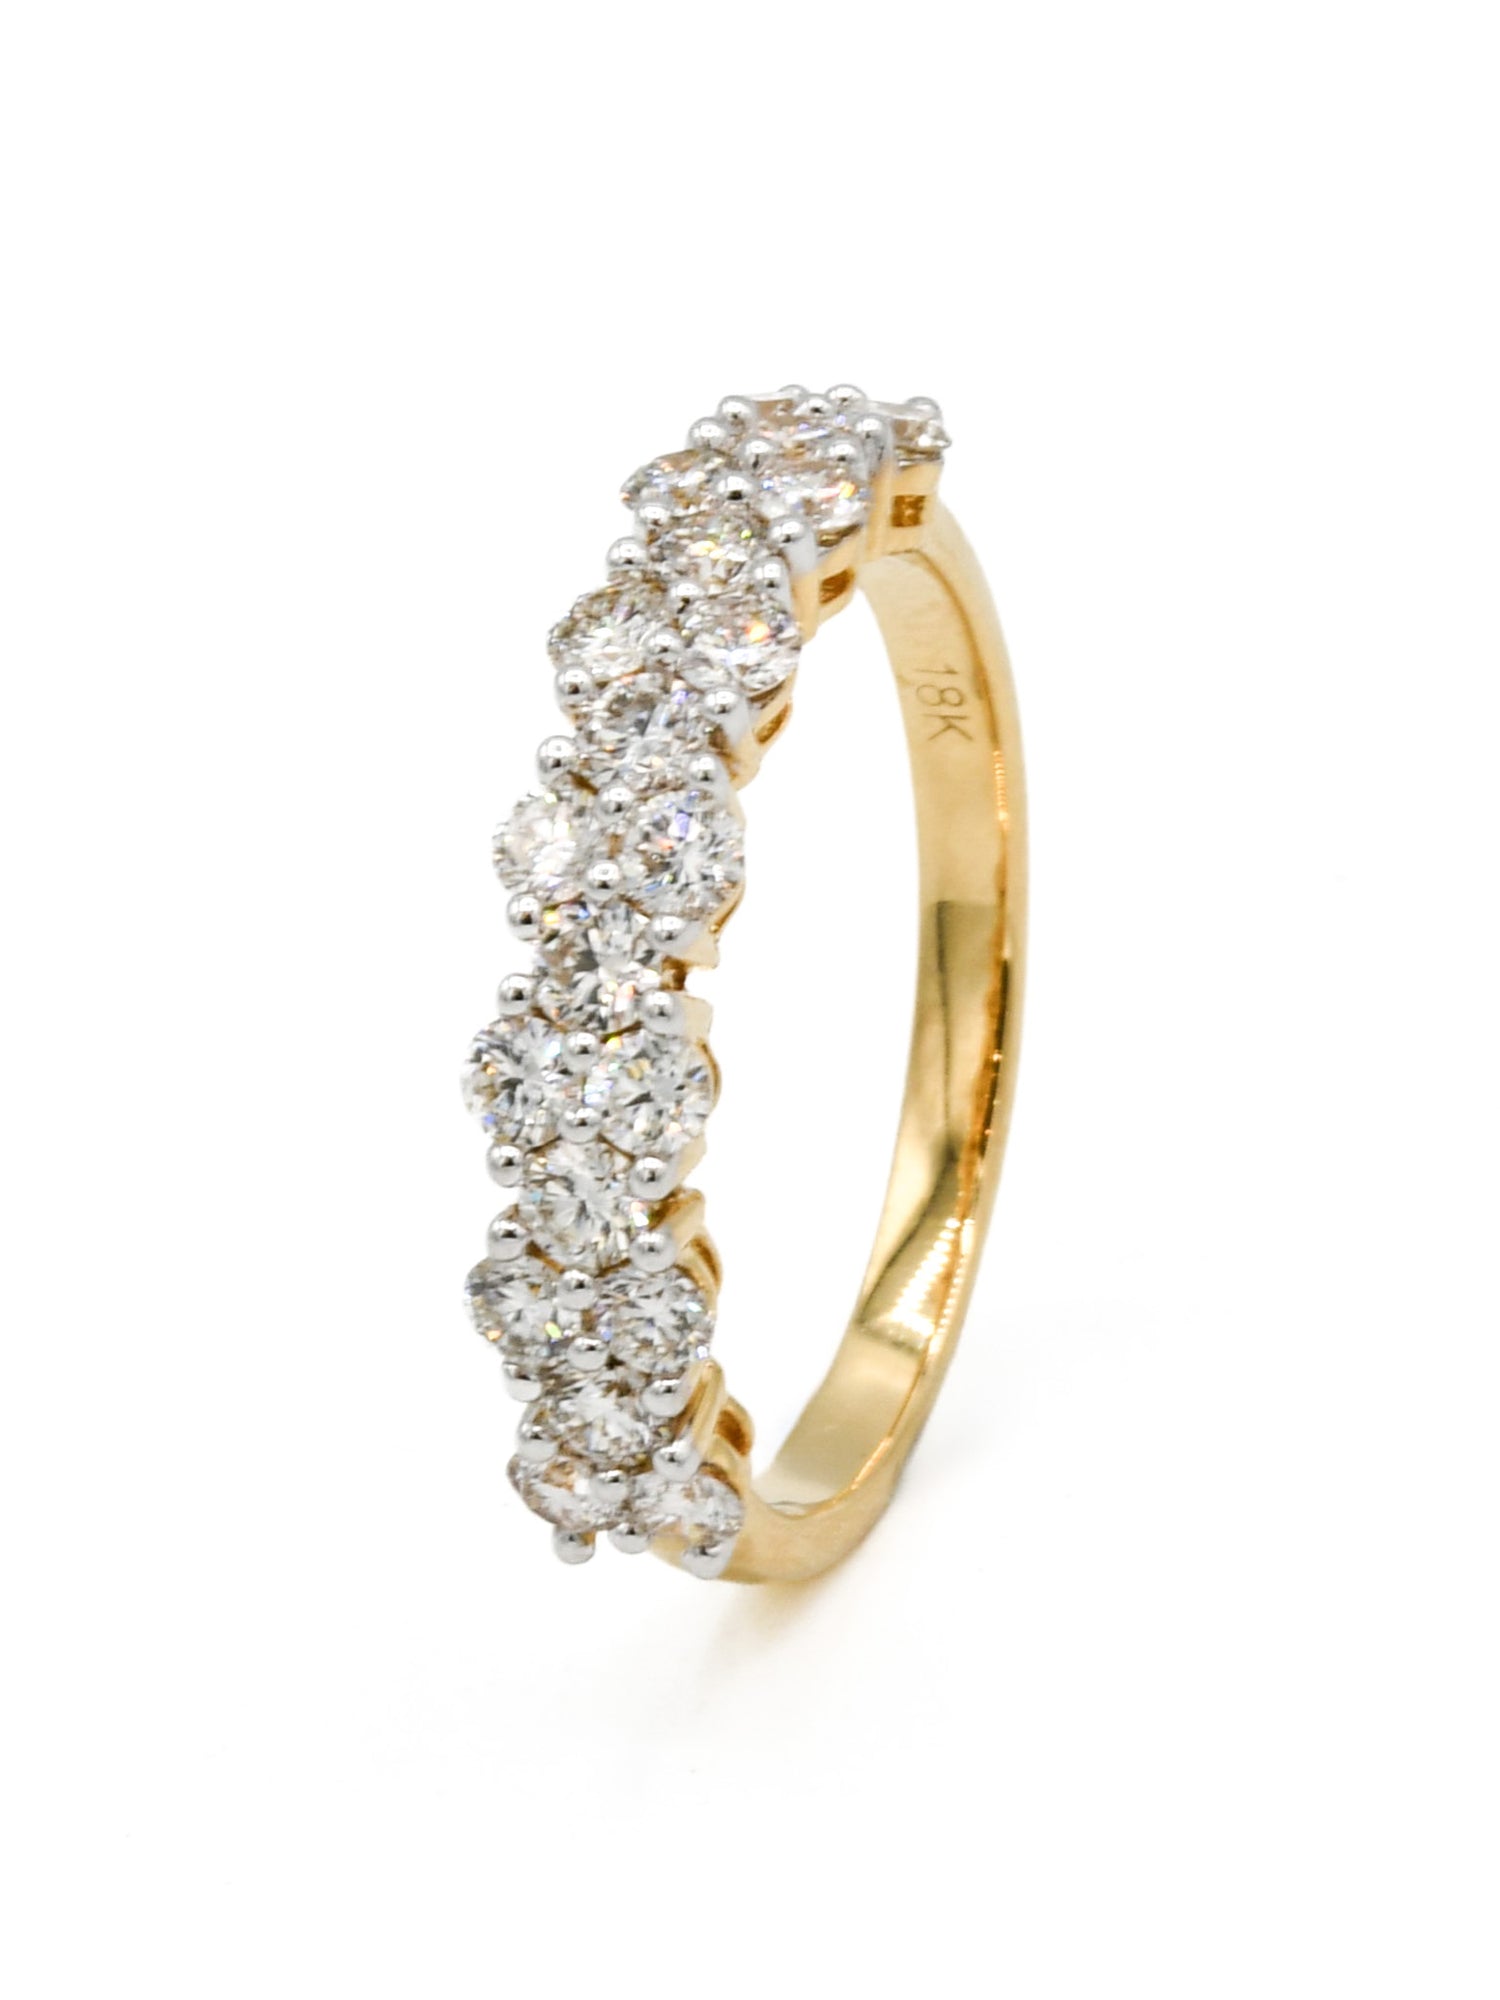 18ct Gold 1.01ct Diamond Ladies Ring - Roop Darshan